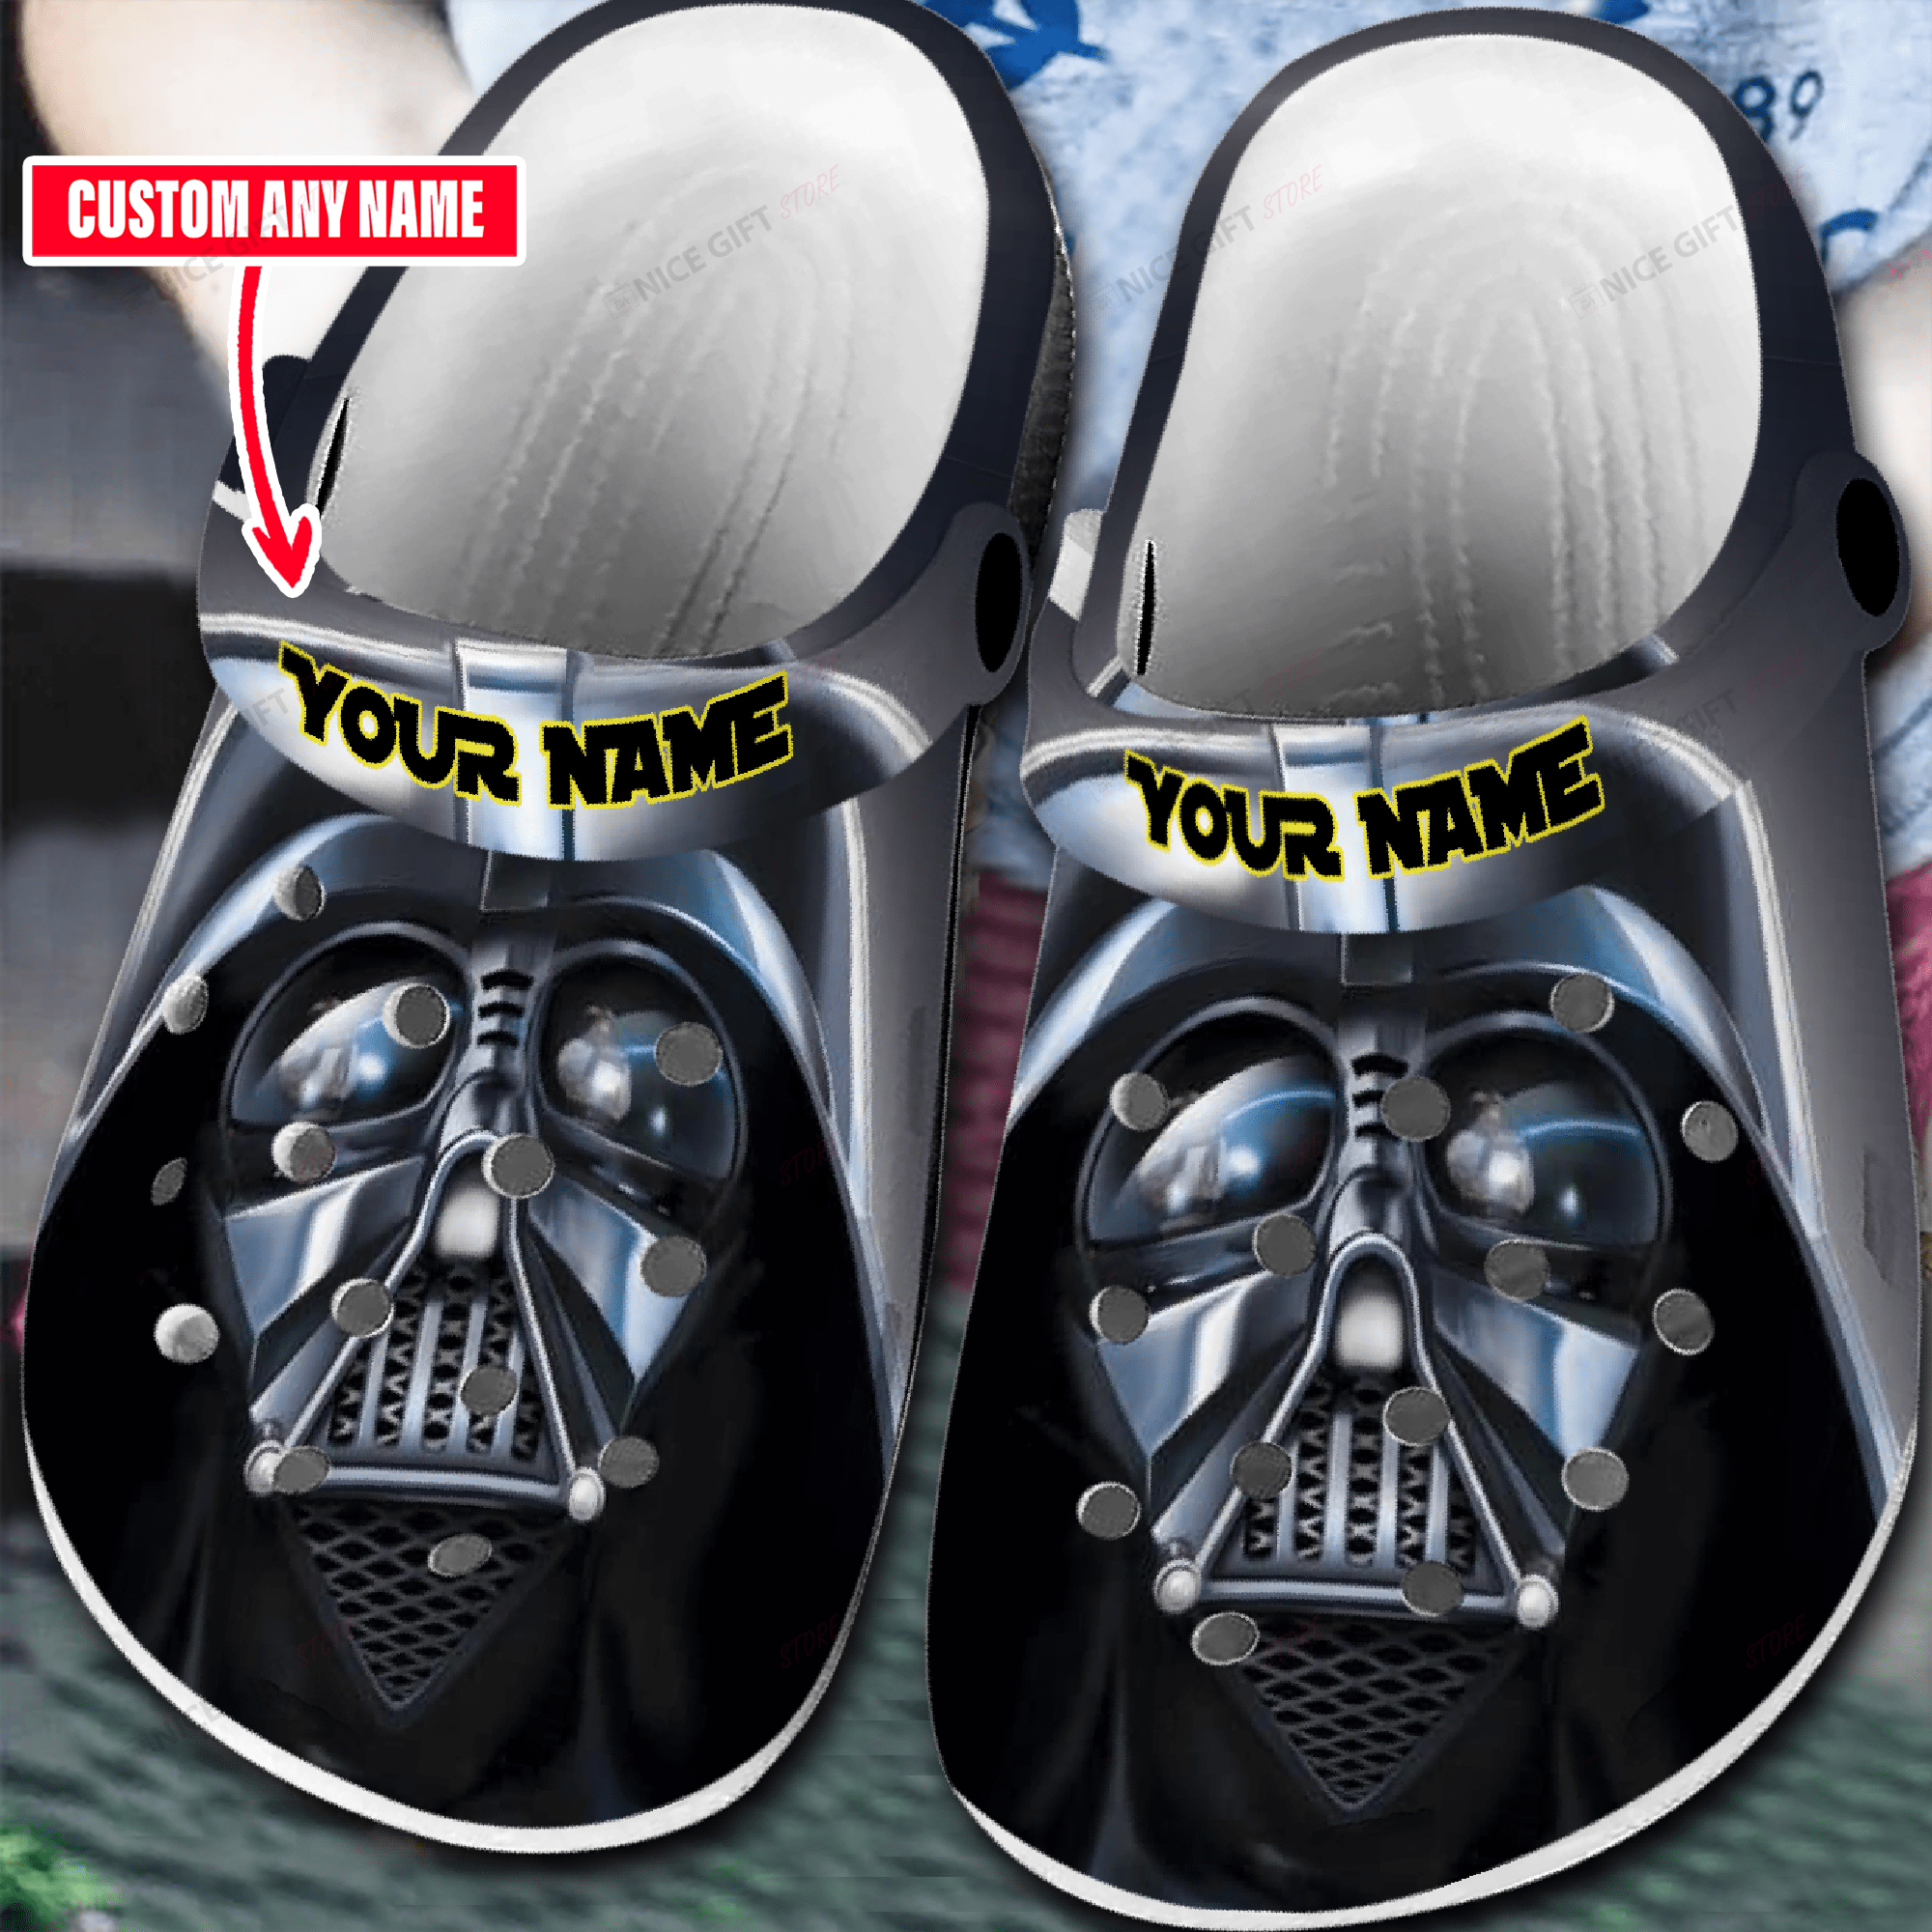 Star Wars Darth Vader Personalized Comfort Crocs Shoes Exclusive Footwear Trend